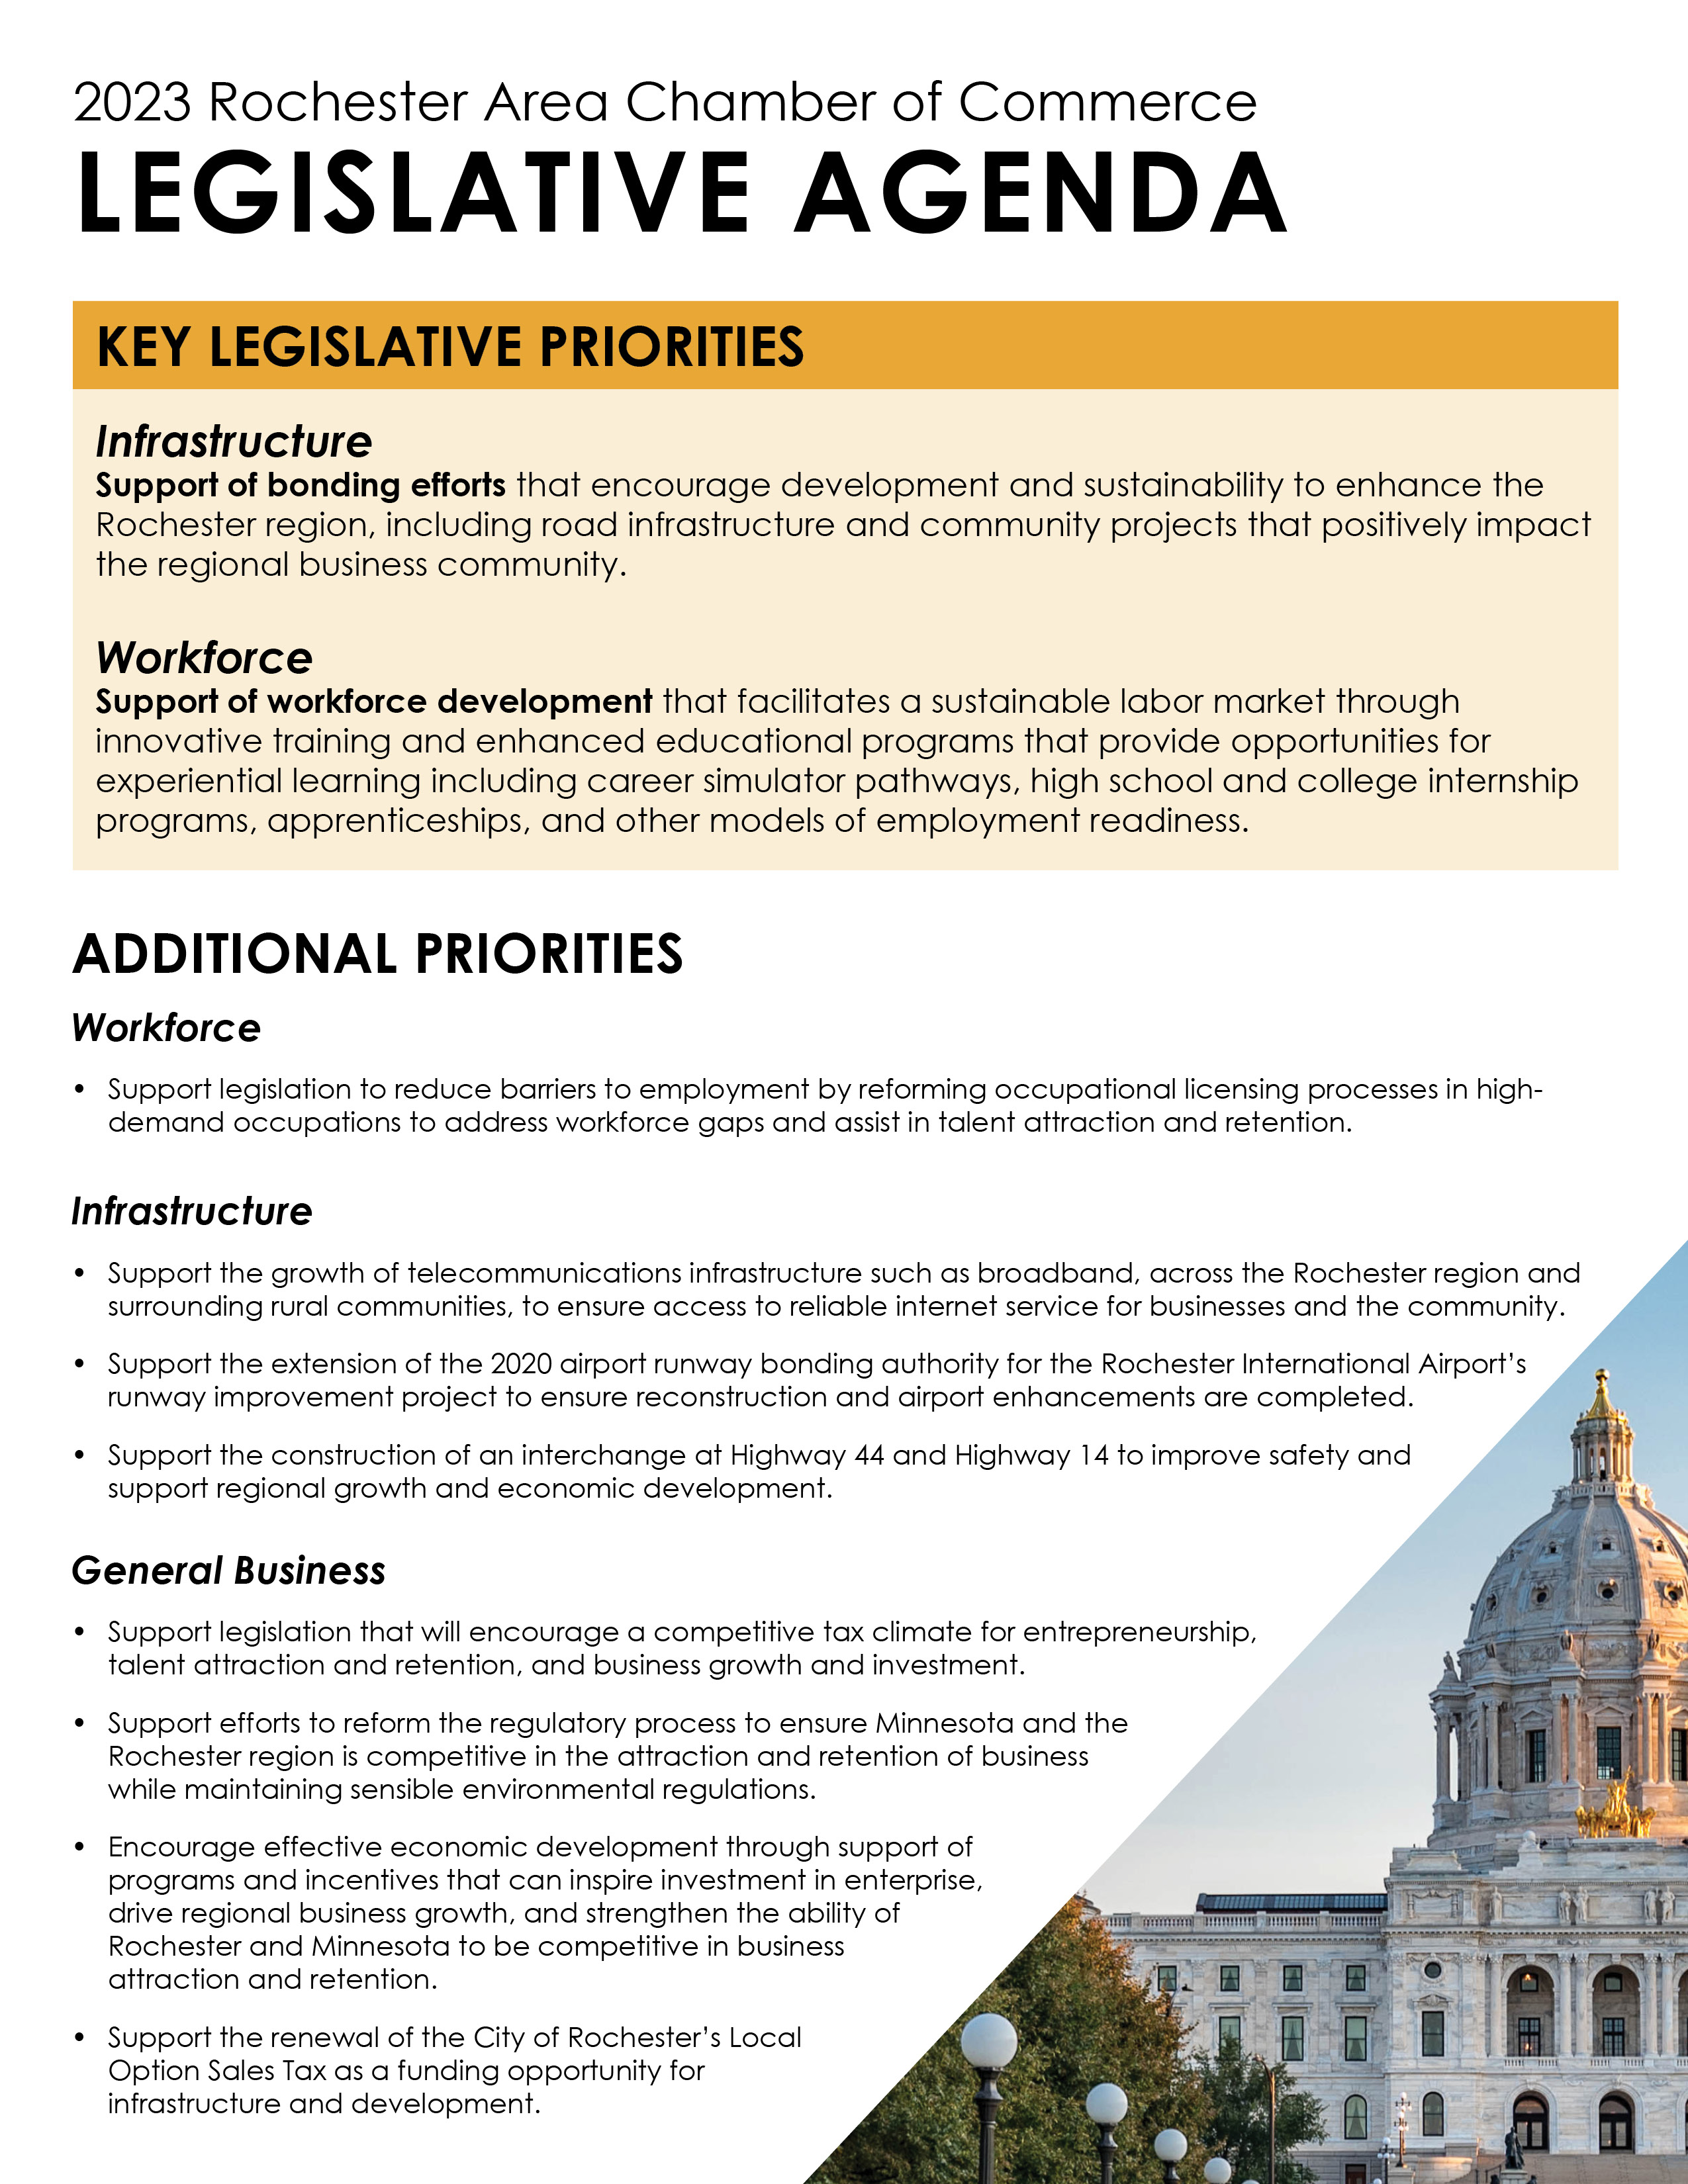 2023 Legislative Agenda - Web